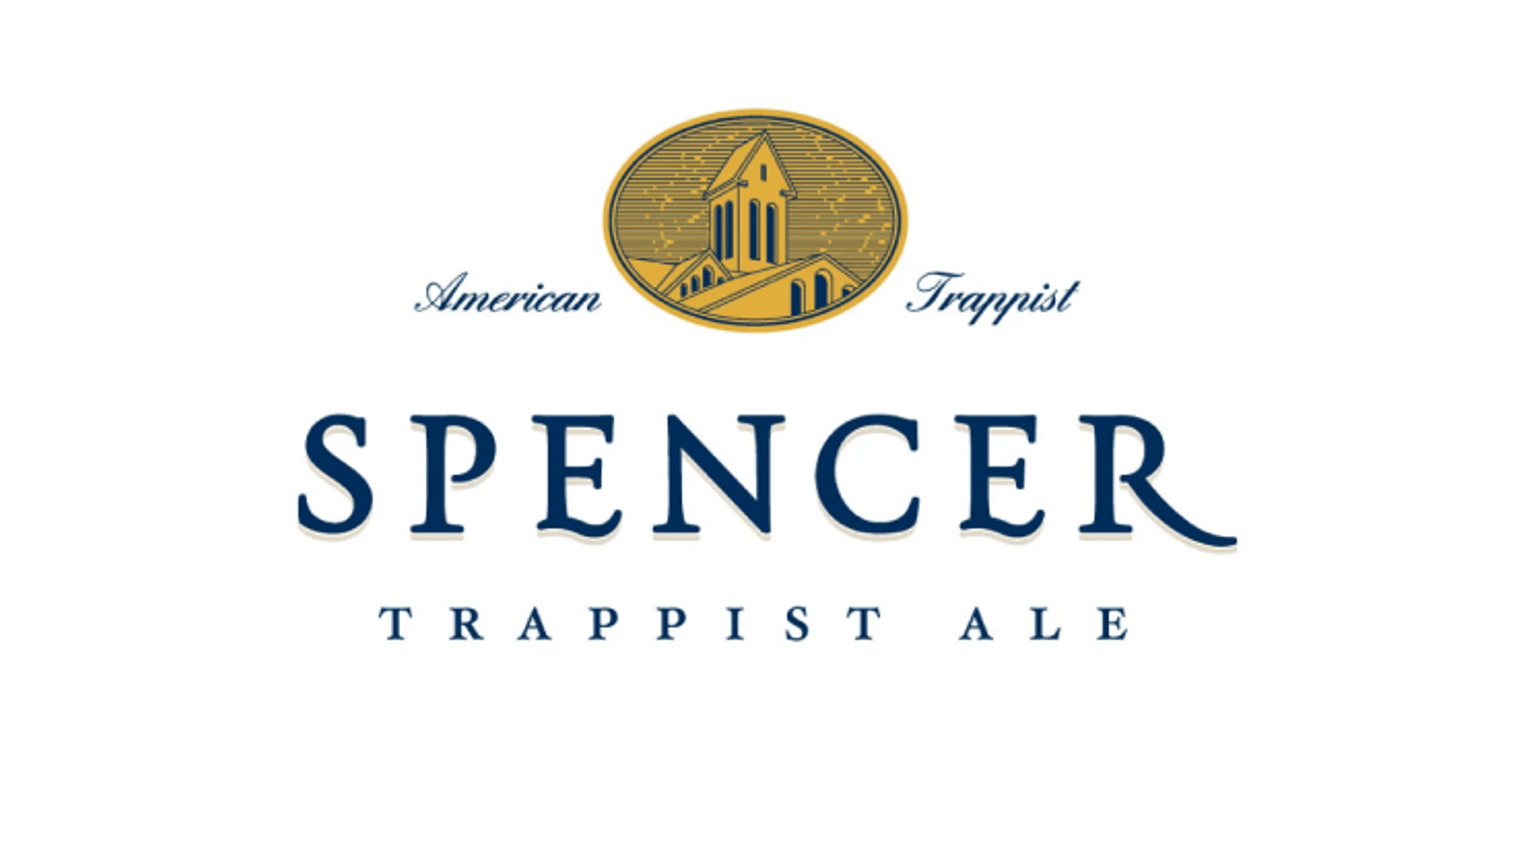 thumbnail for blog article named: Het verhaal van Spencer Trappist Brewery.